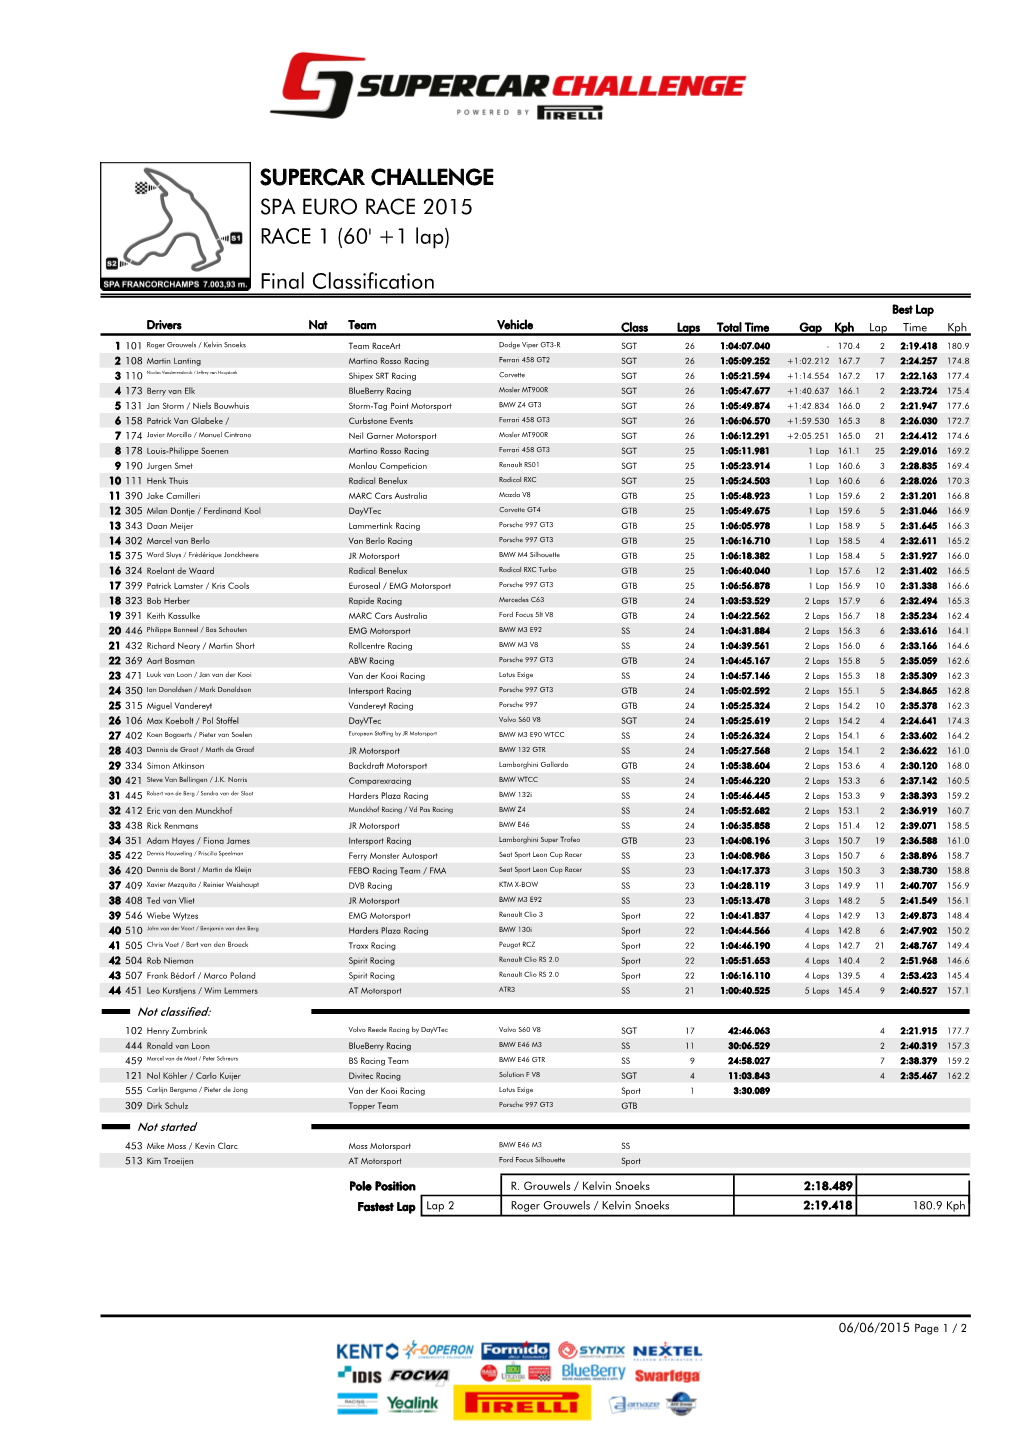 Final Classification SPA EURO RACE 2015 SUPERCAR CHALLENGE